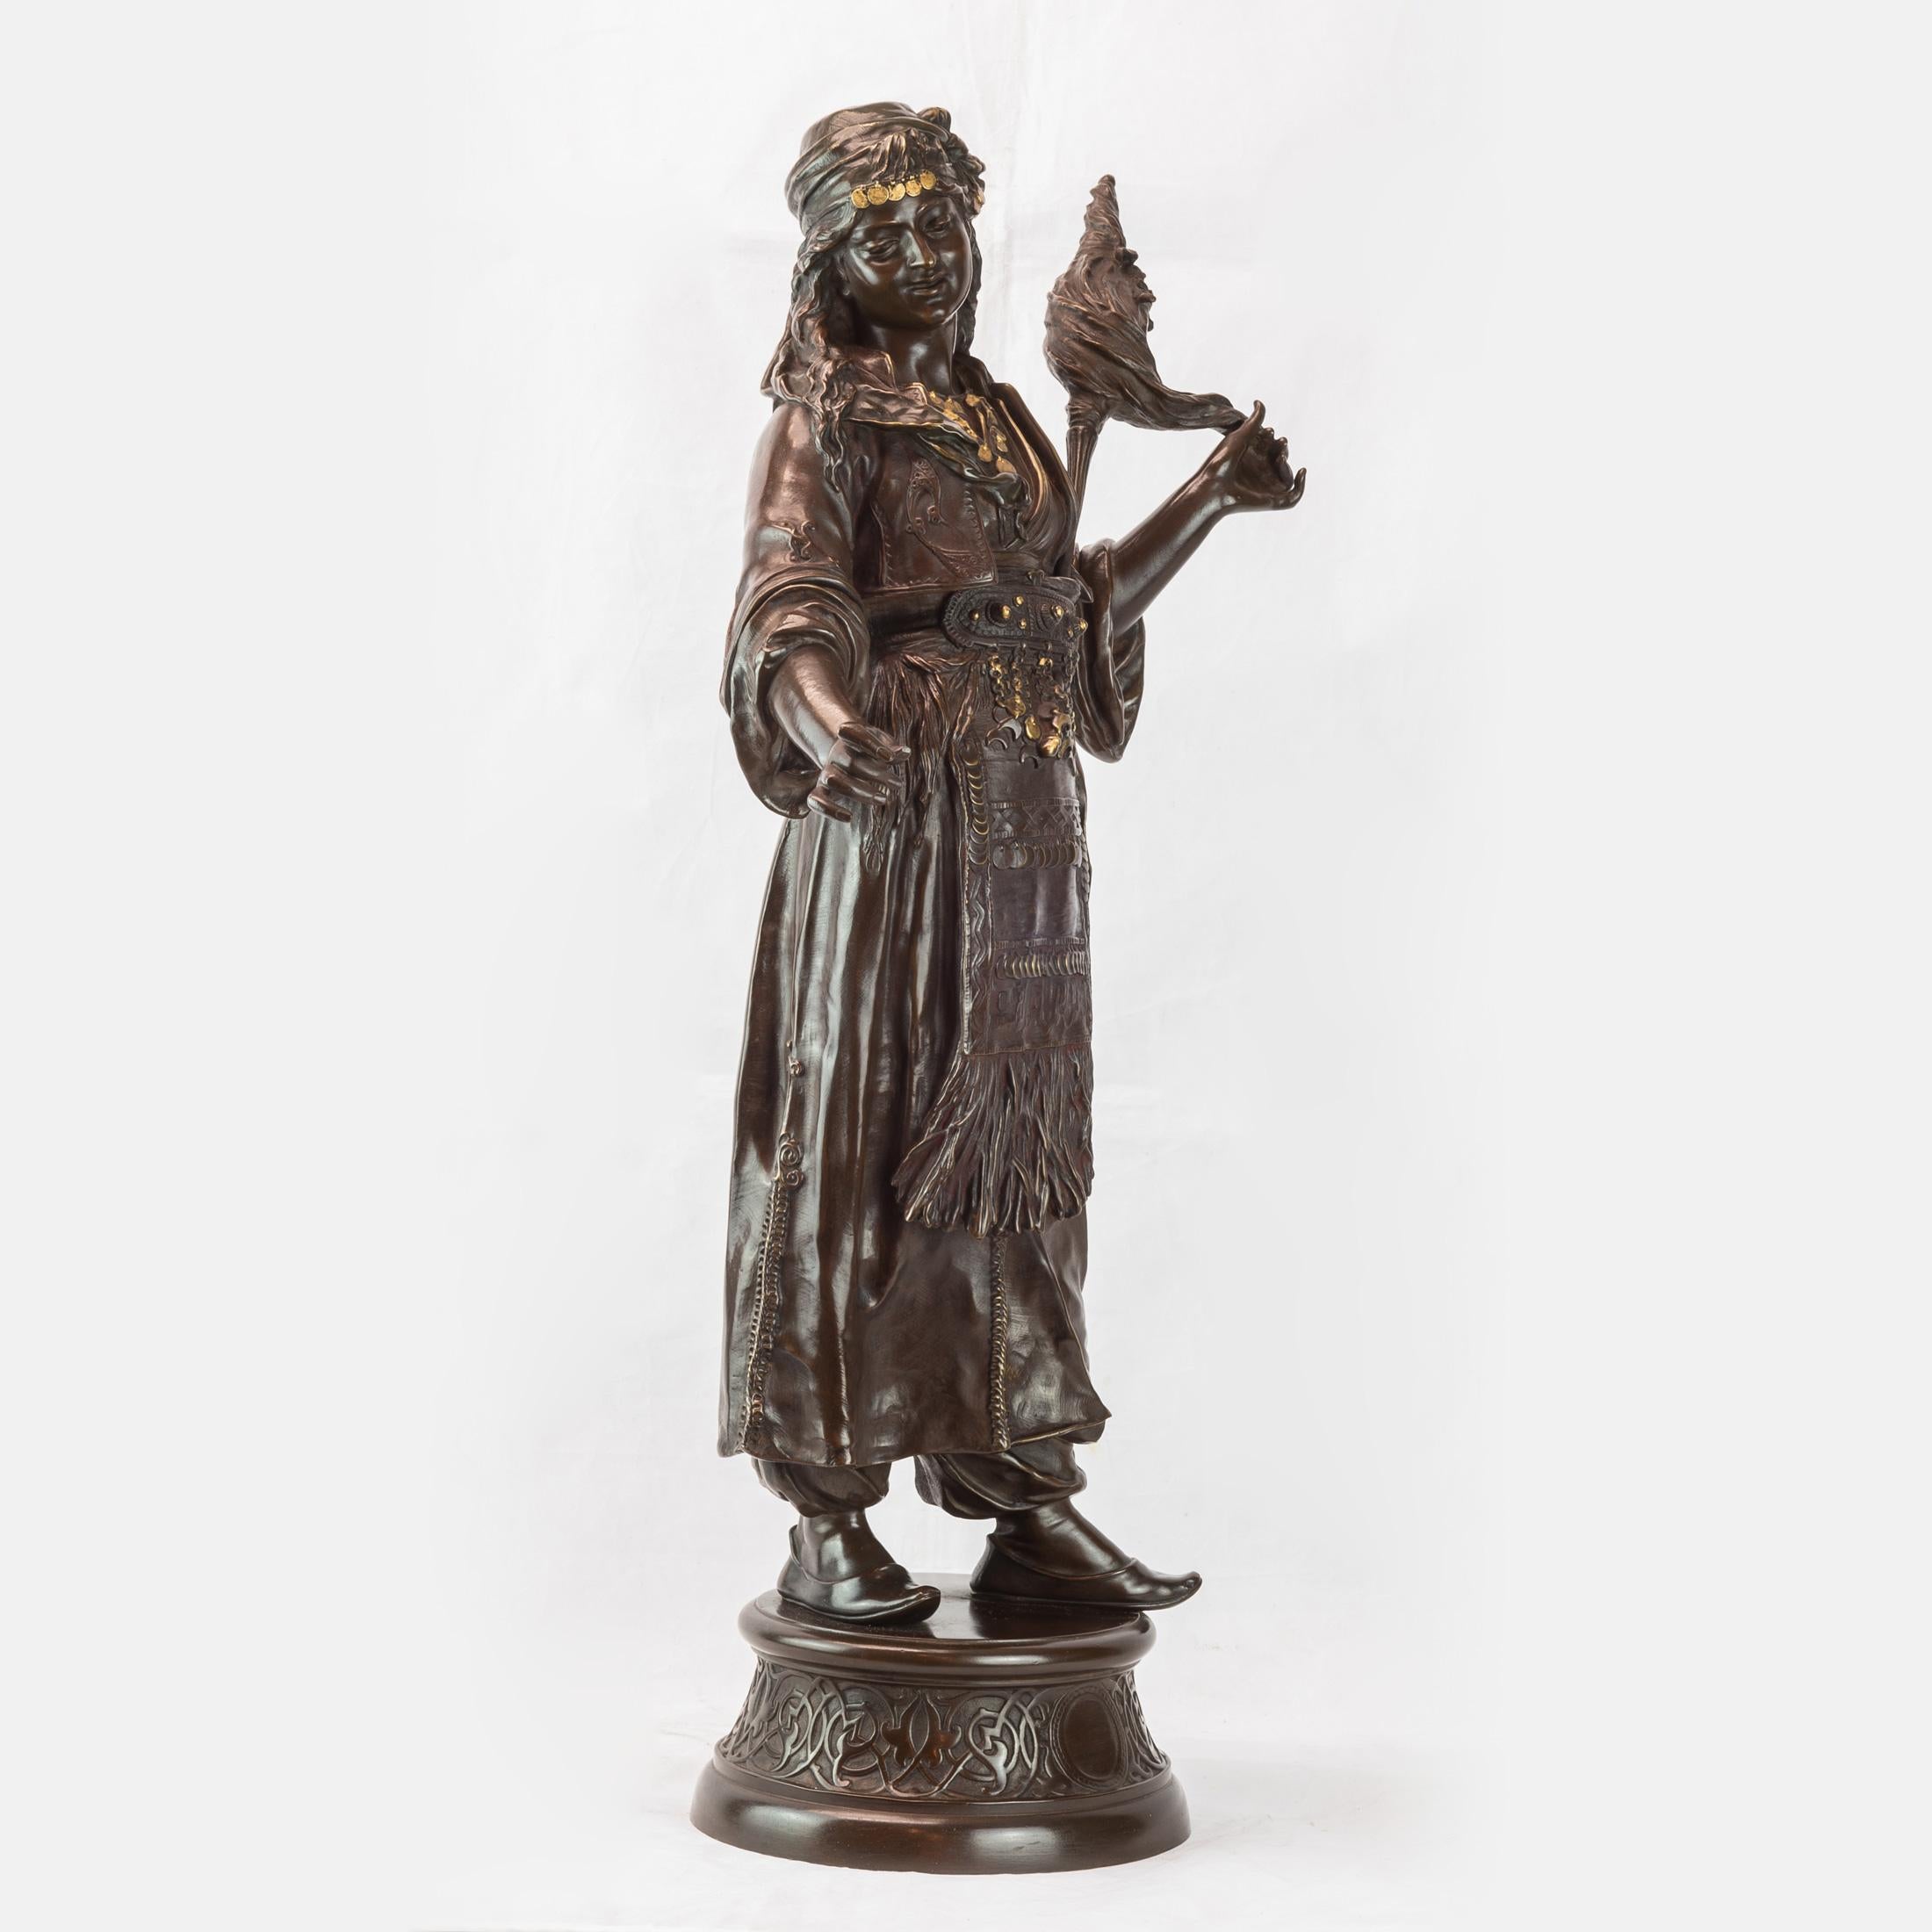 A Fine Émile Guillemin Patinated Bronze Statue of a  Dancing Female Gypsy - Sculpture by Émile-Coriolan-Hippolyte Guillemin